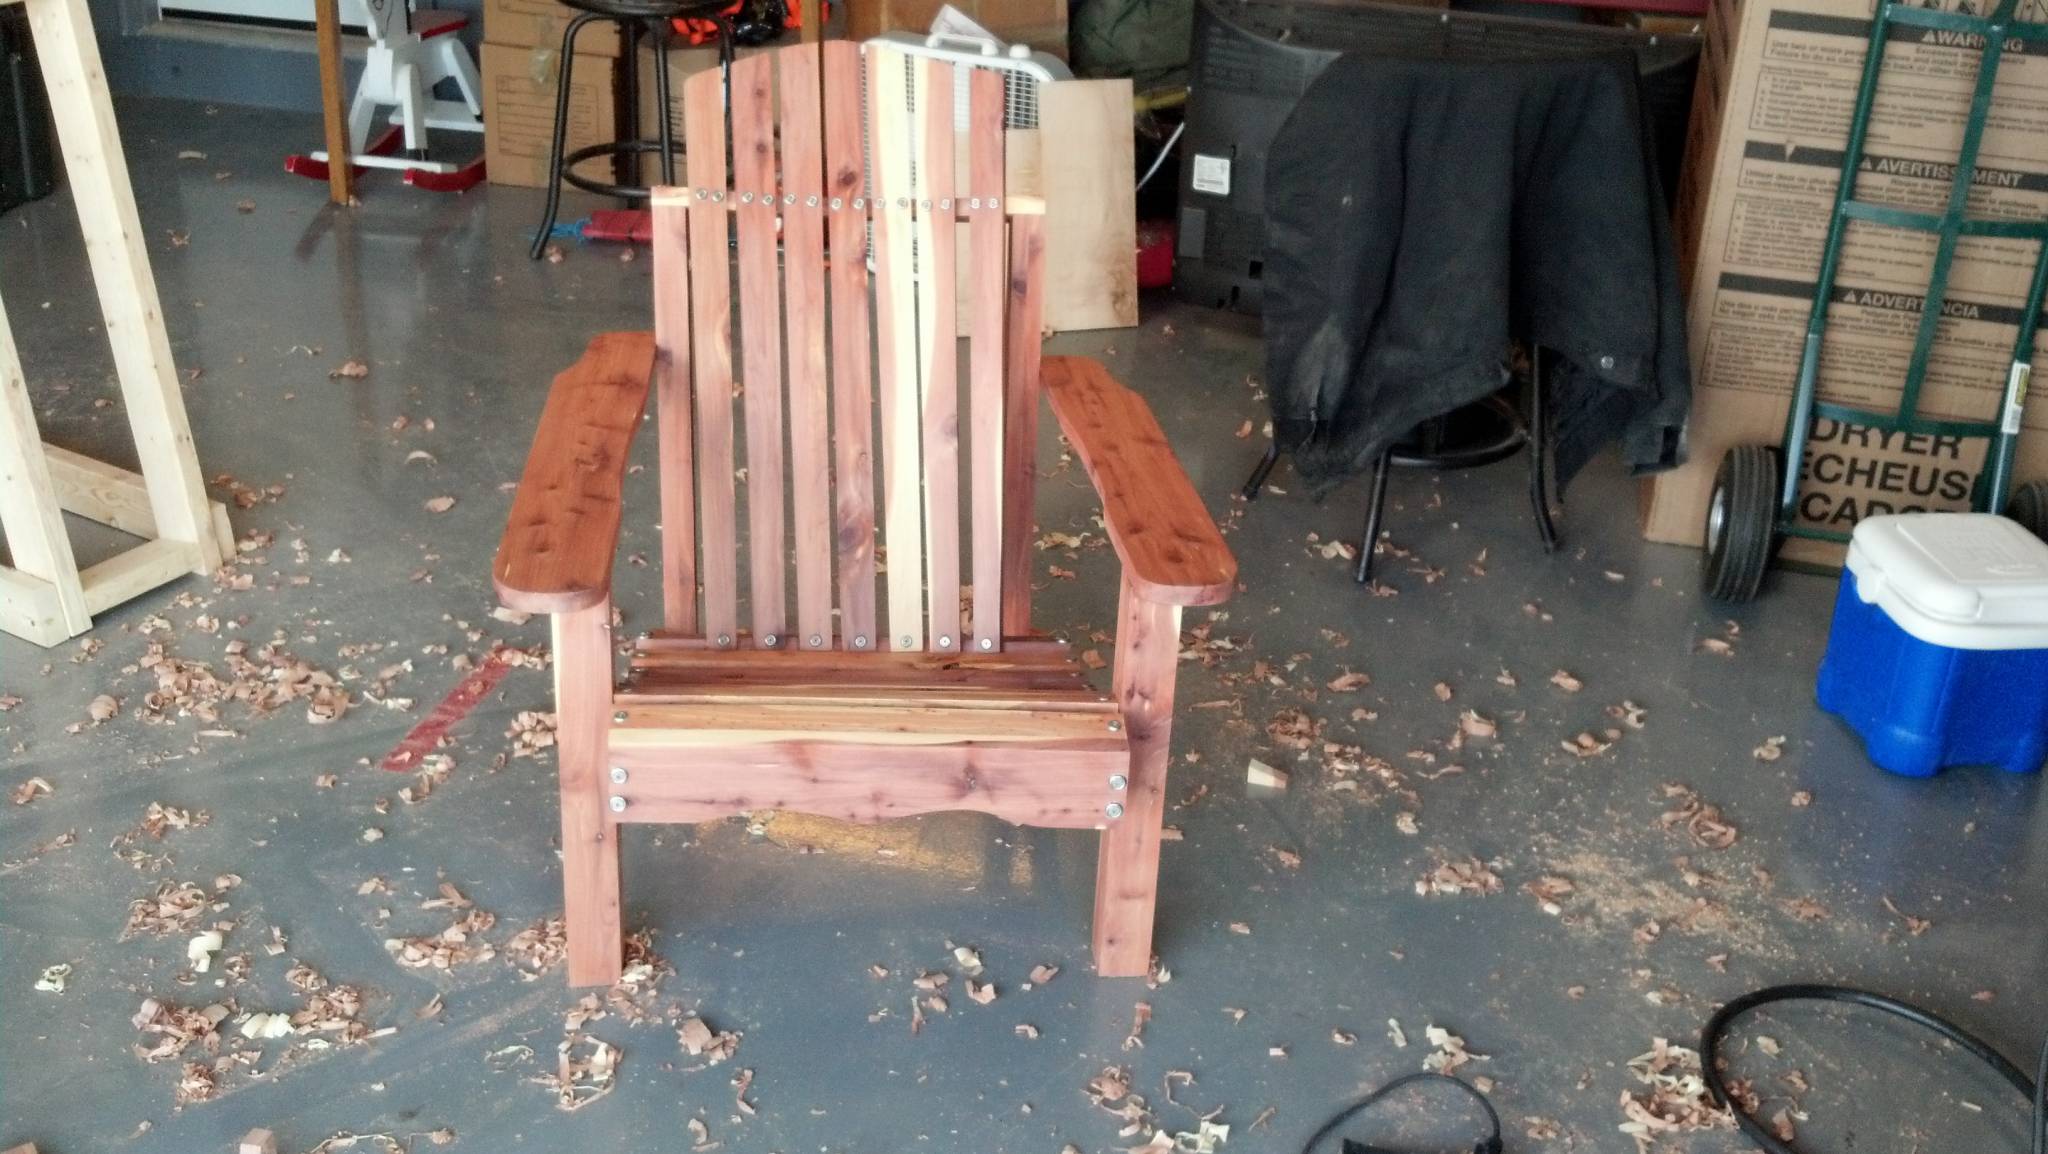 Eastern Red Cedar Adirondack Chair